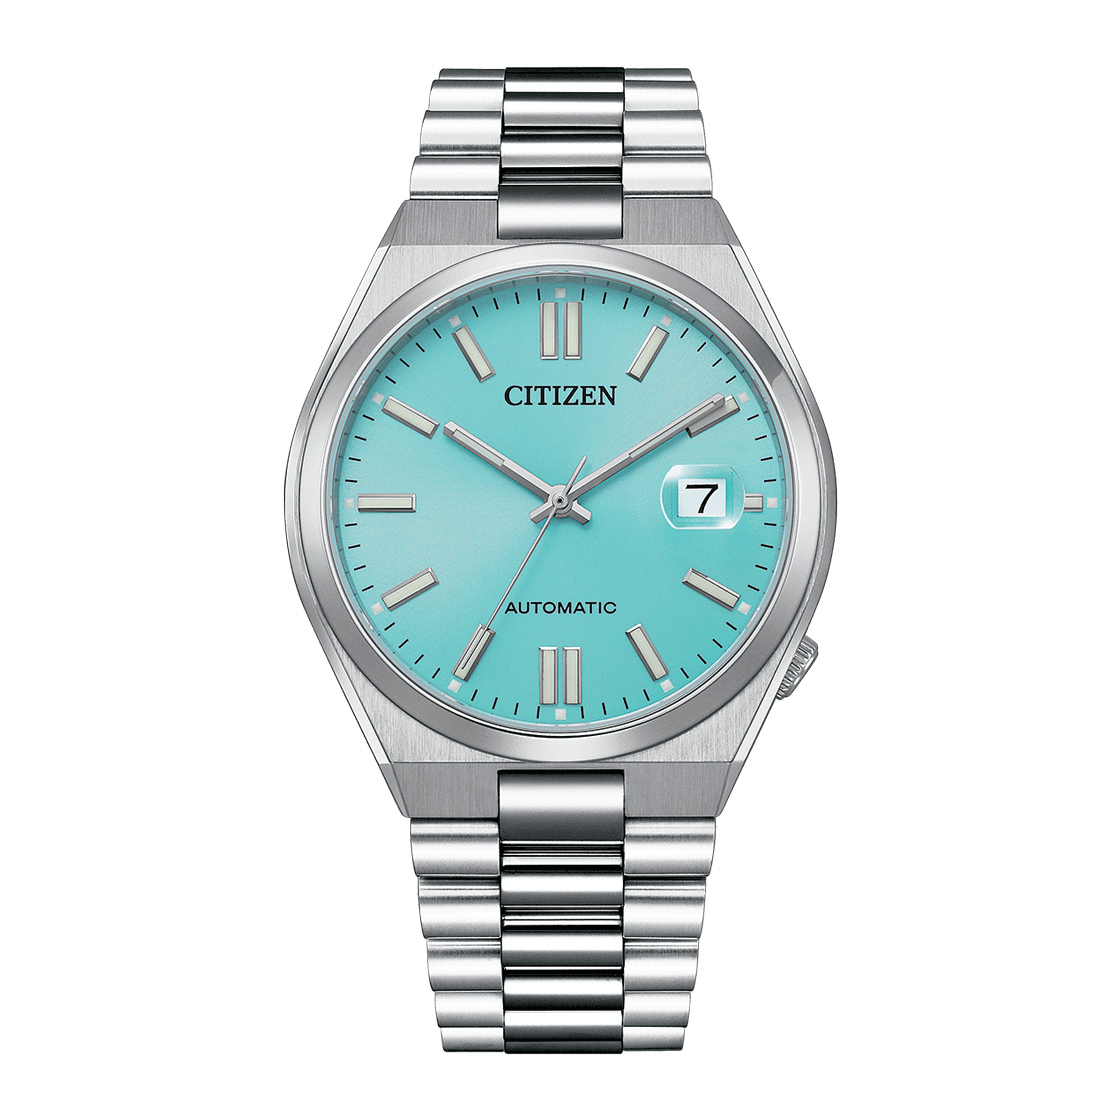 Men's Watches: Wristwatches and Smartwatches | Diesel®